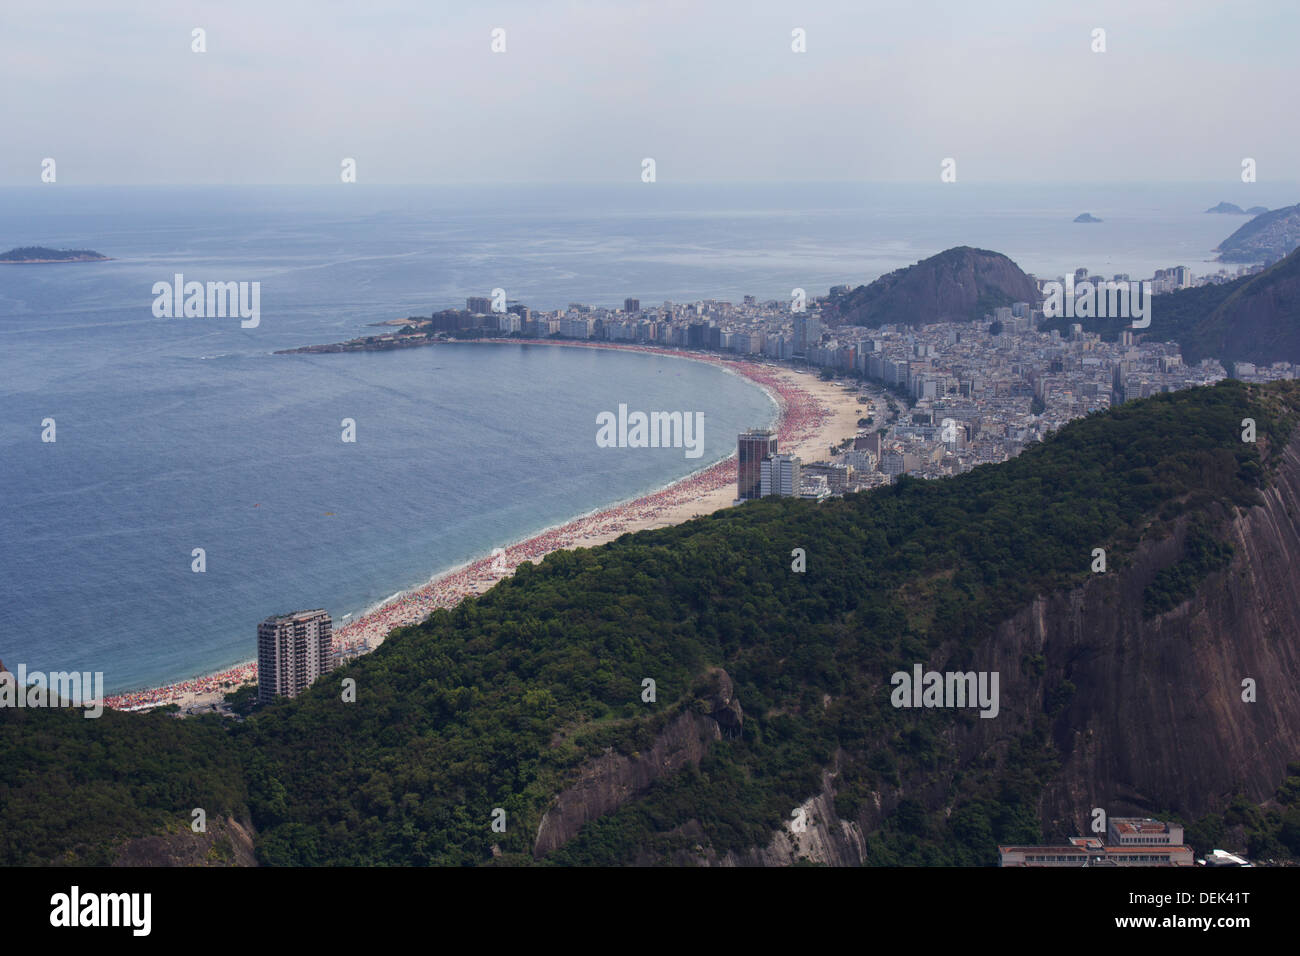 View from Sugar-loaf mountain towards Copacobana beach, Rio de Janiero, Brazil Stock Photo